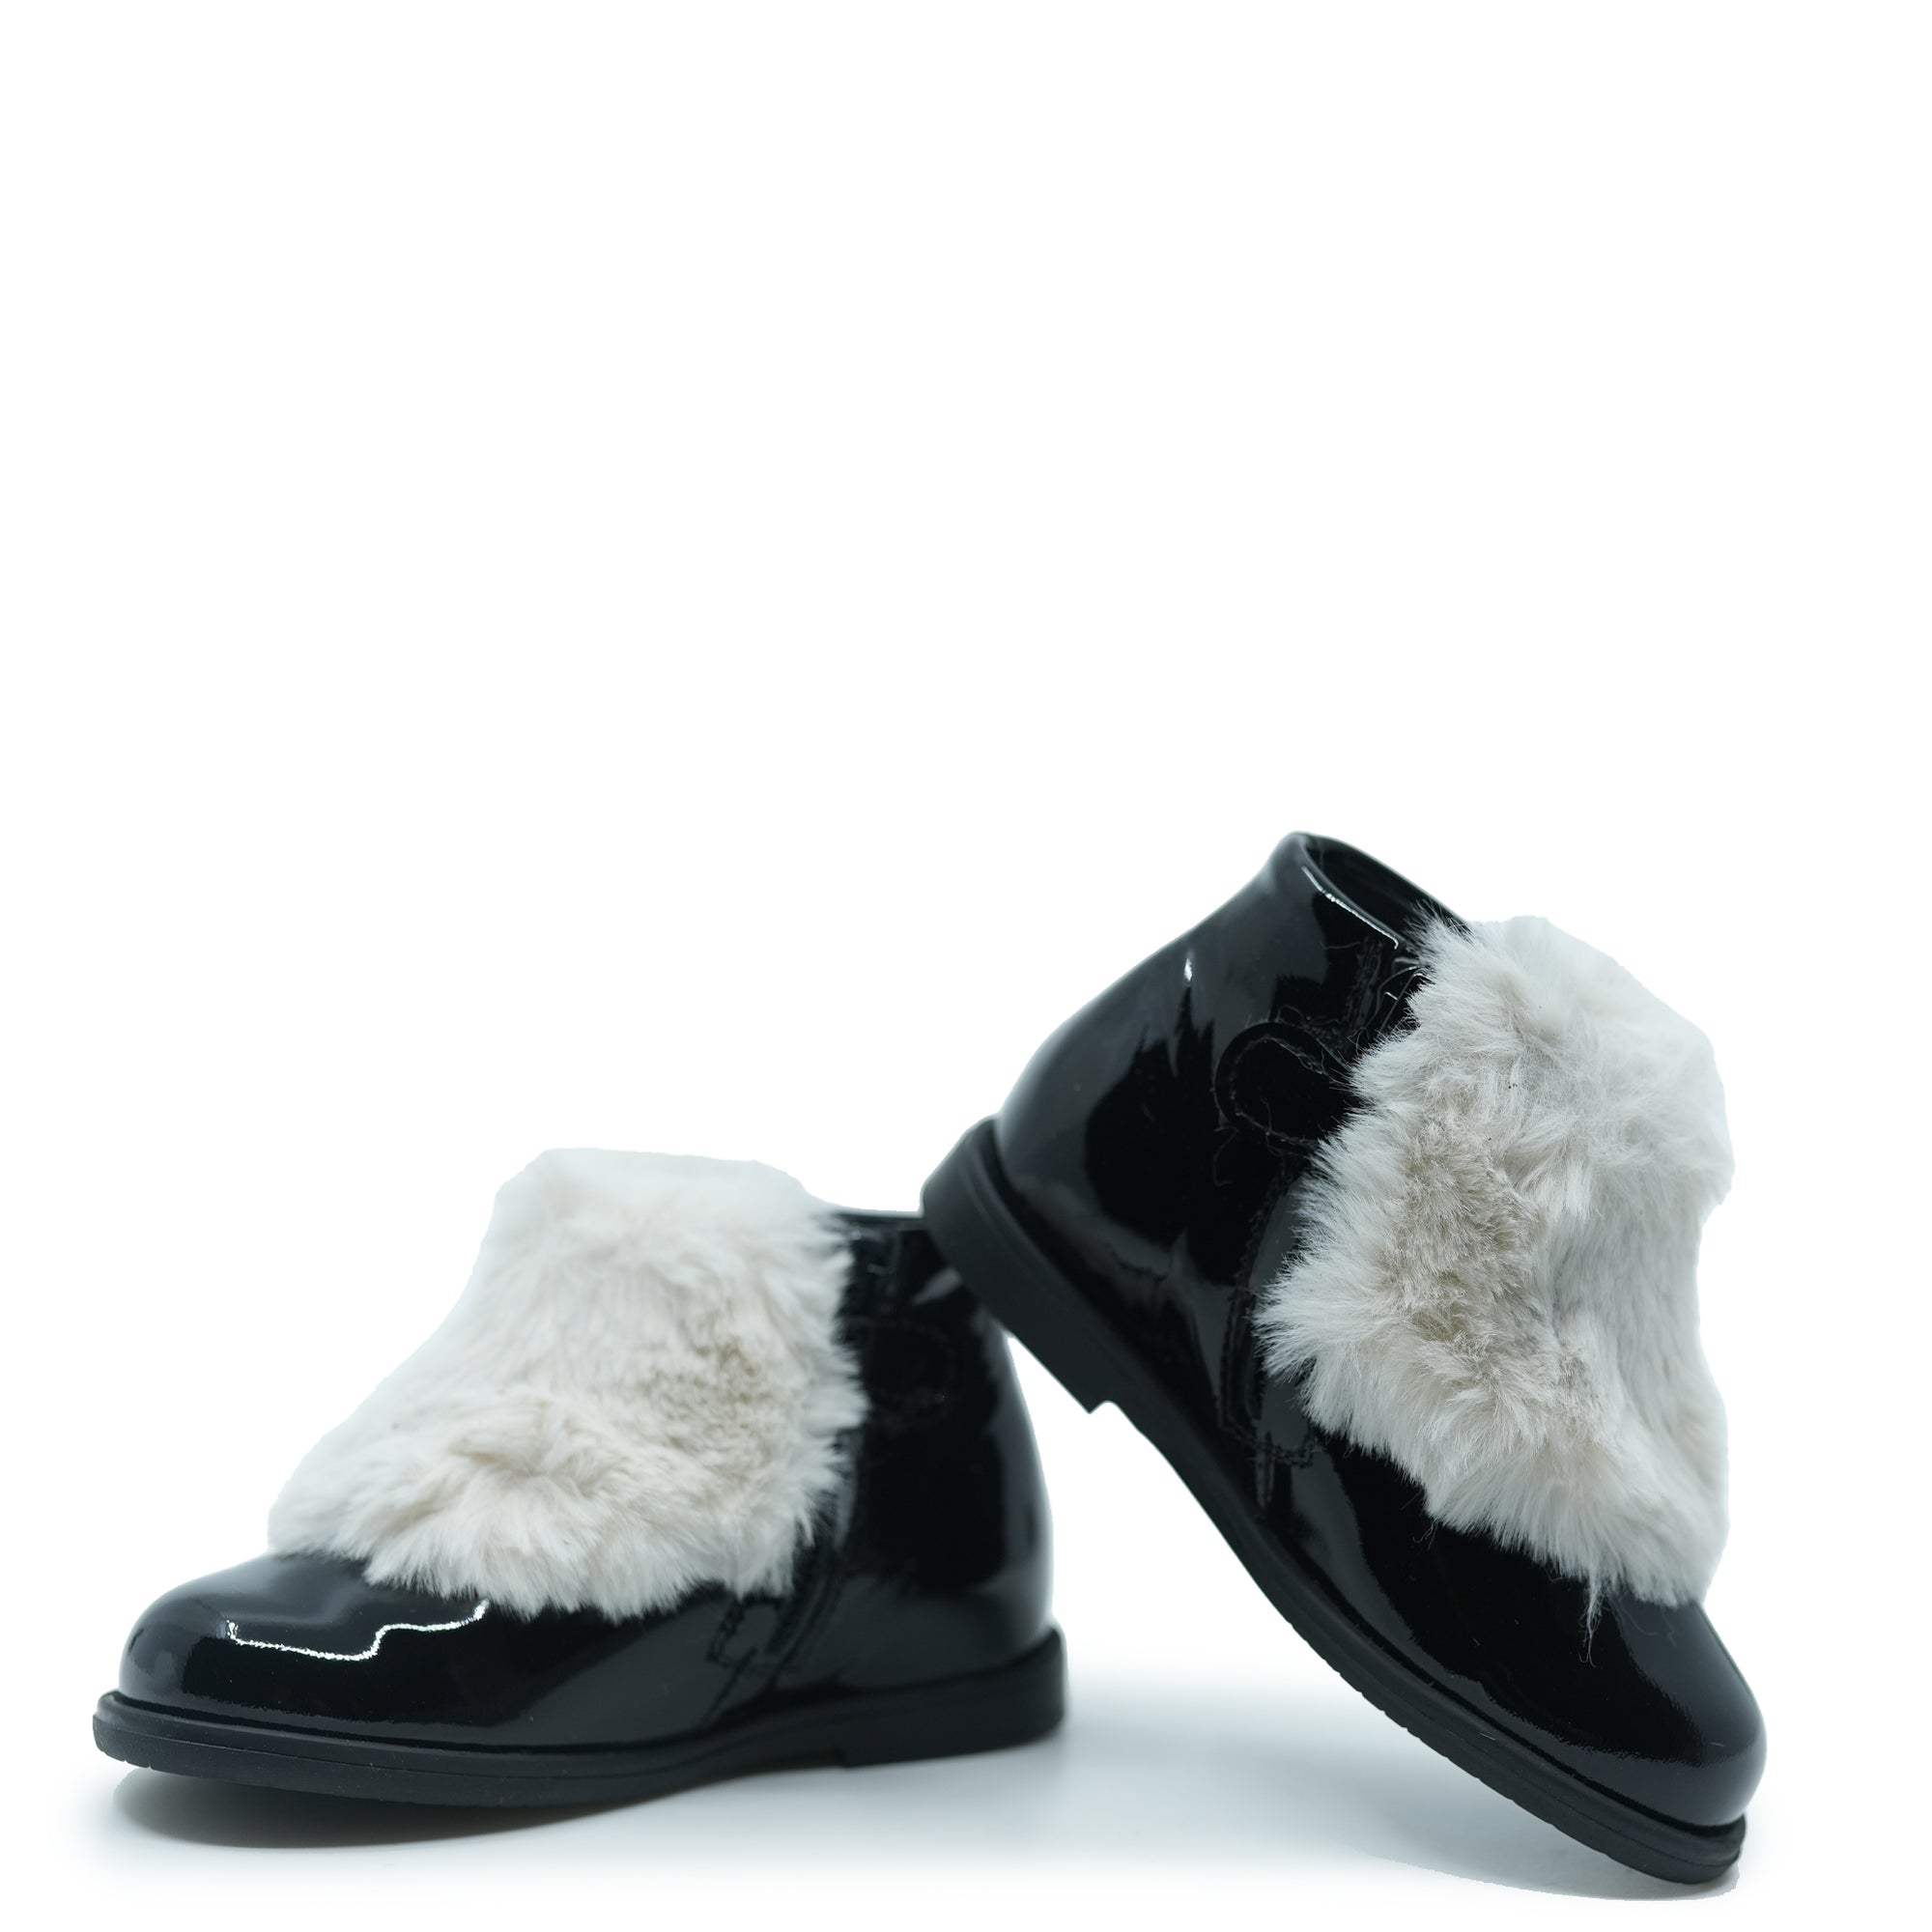 Manuela Black Patent and White Fur Baby Bootie-Tassel Children Shoes